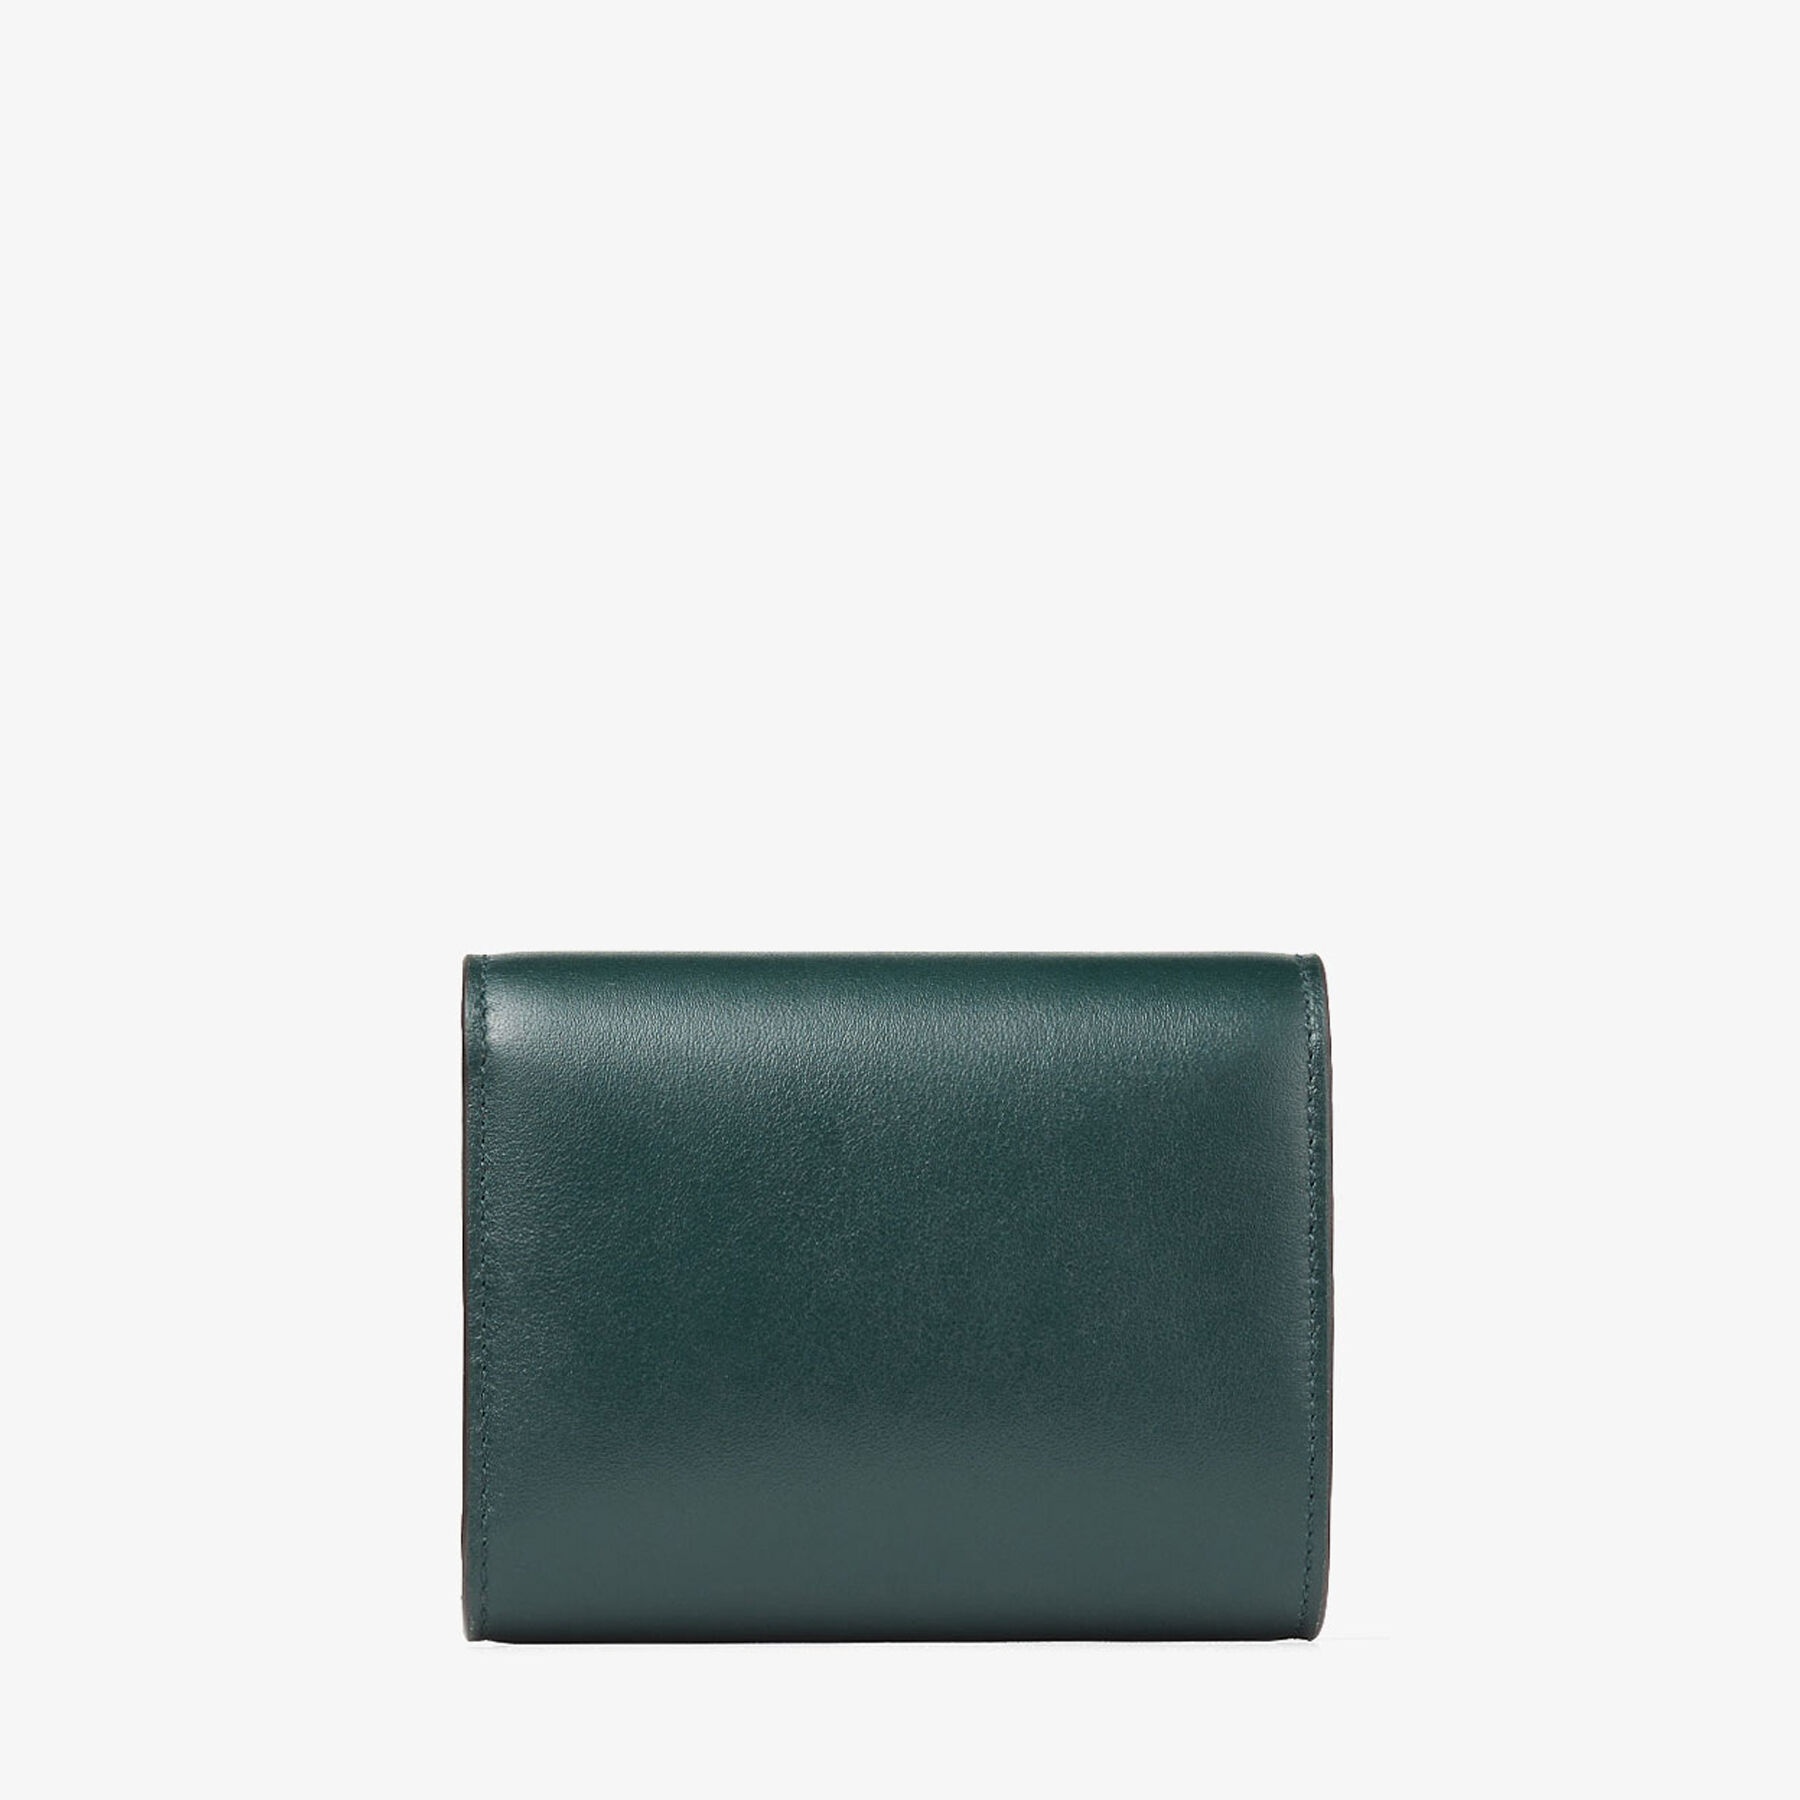 Marinda
Dark Green and Biscuit Bi-Colour Leather Wallet - 5